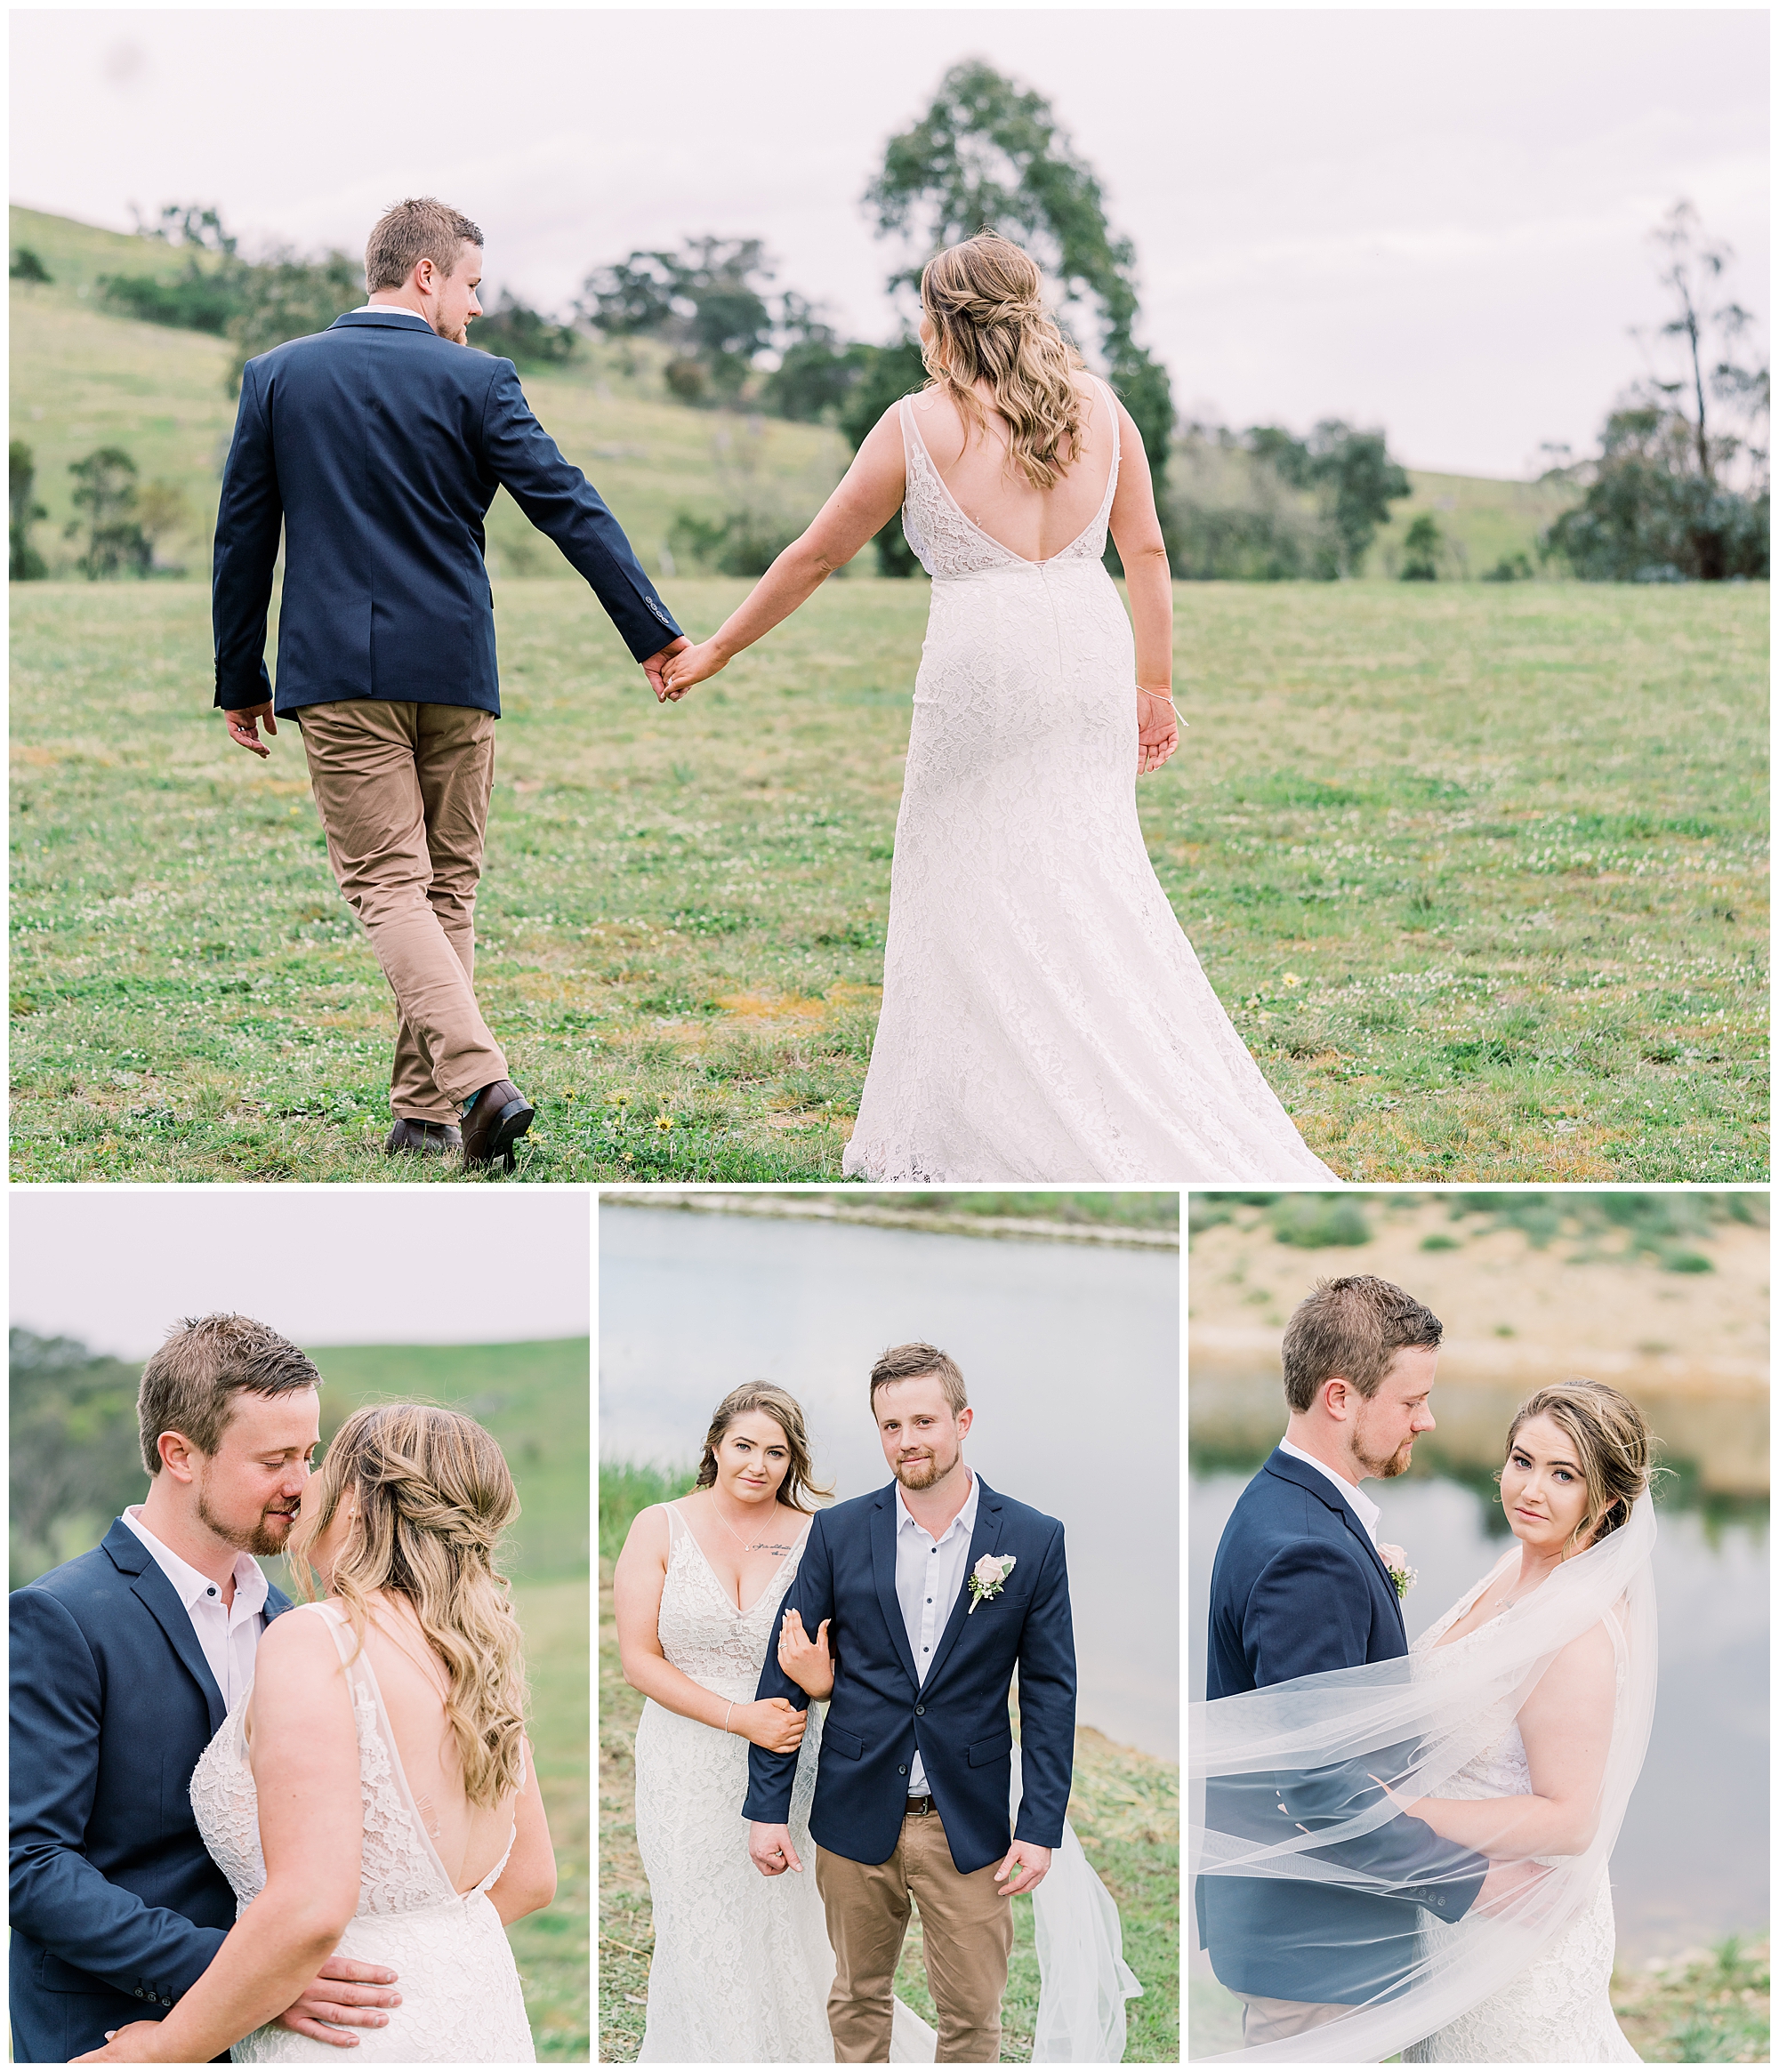 Wedding photographer | Bride and groom walking holding hands